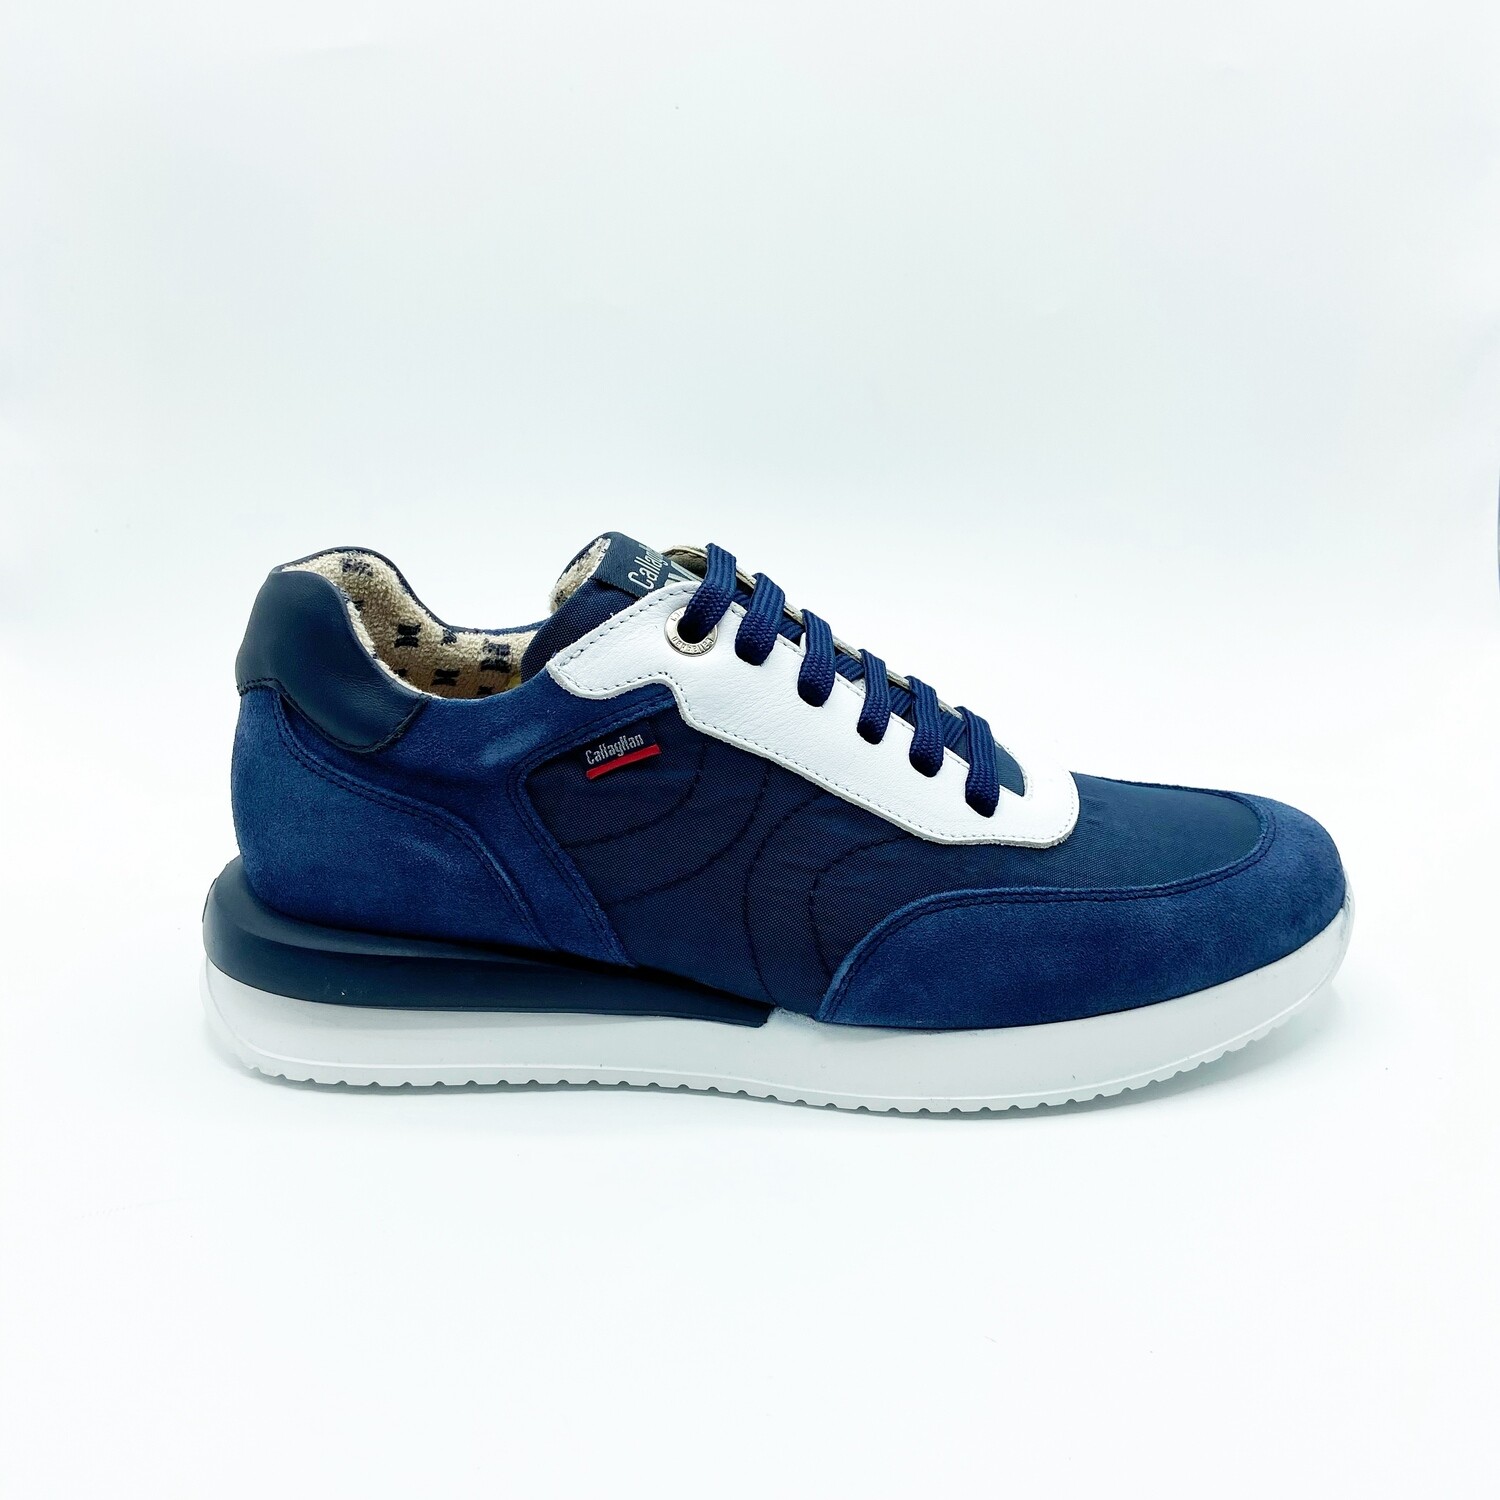 Sneakers Callaghan art.51100 colore blu